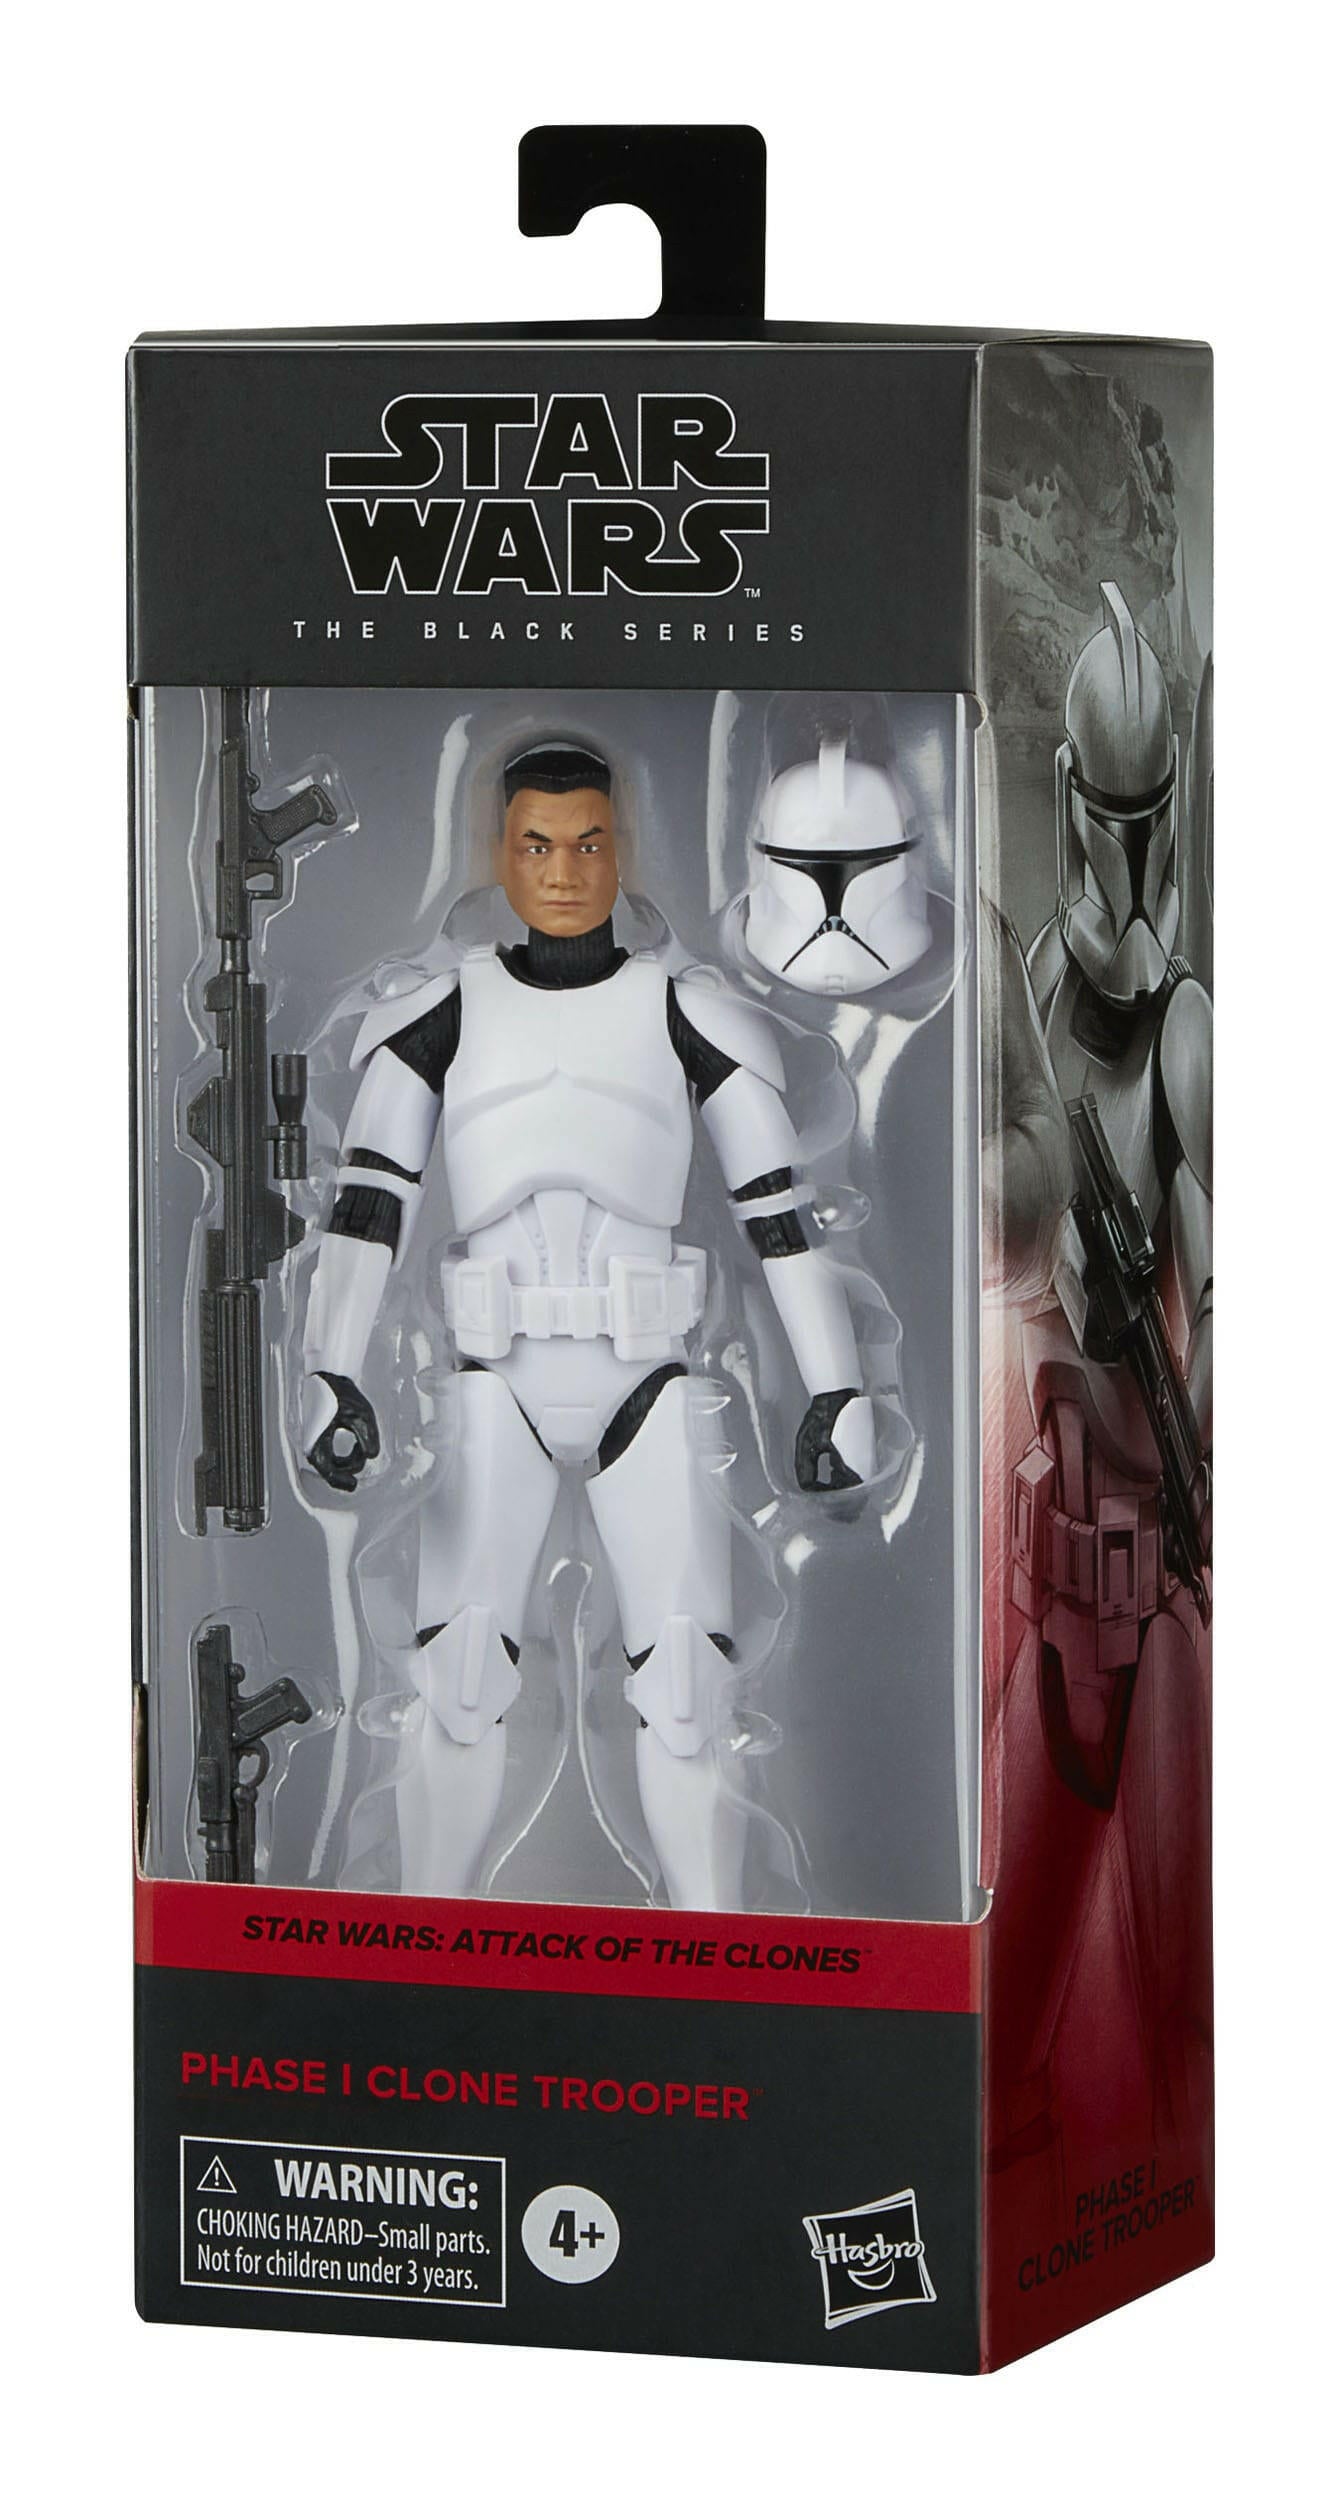 Pre-Order! Star Wars Black Series Episode II Actionfigur Phase I Clone Trooper 15cm Hasbro